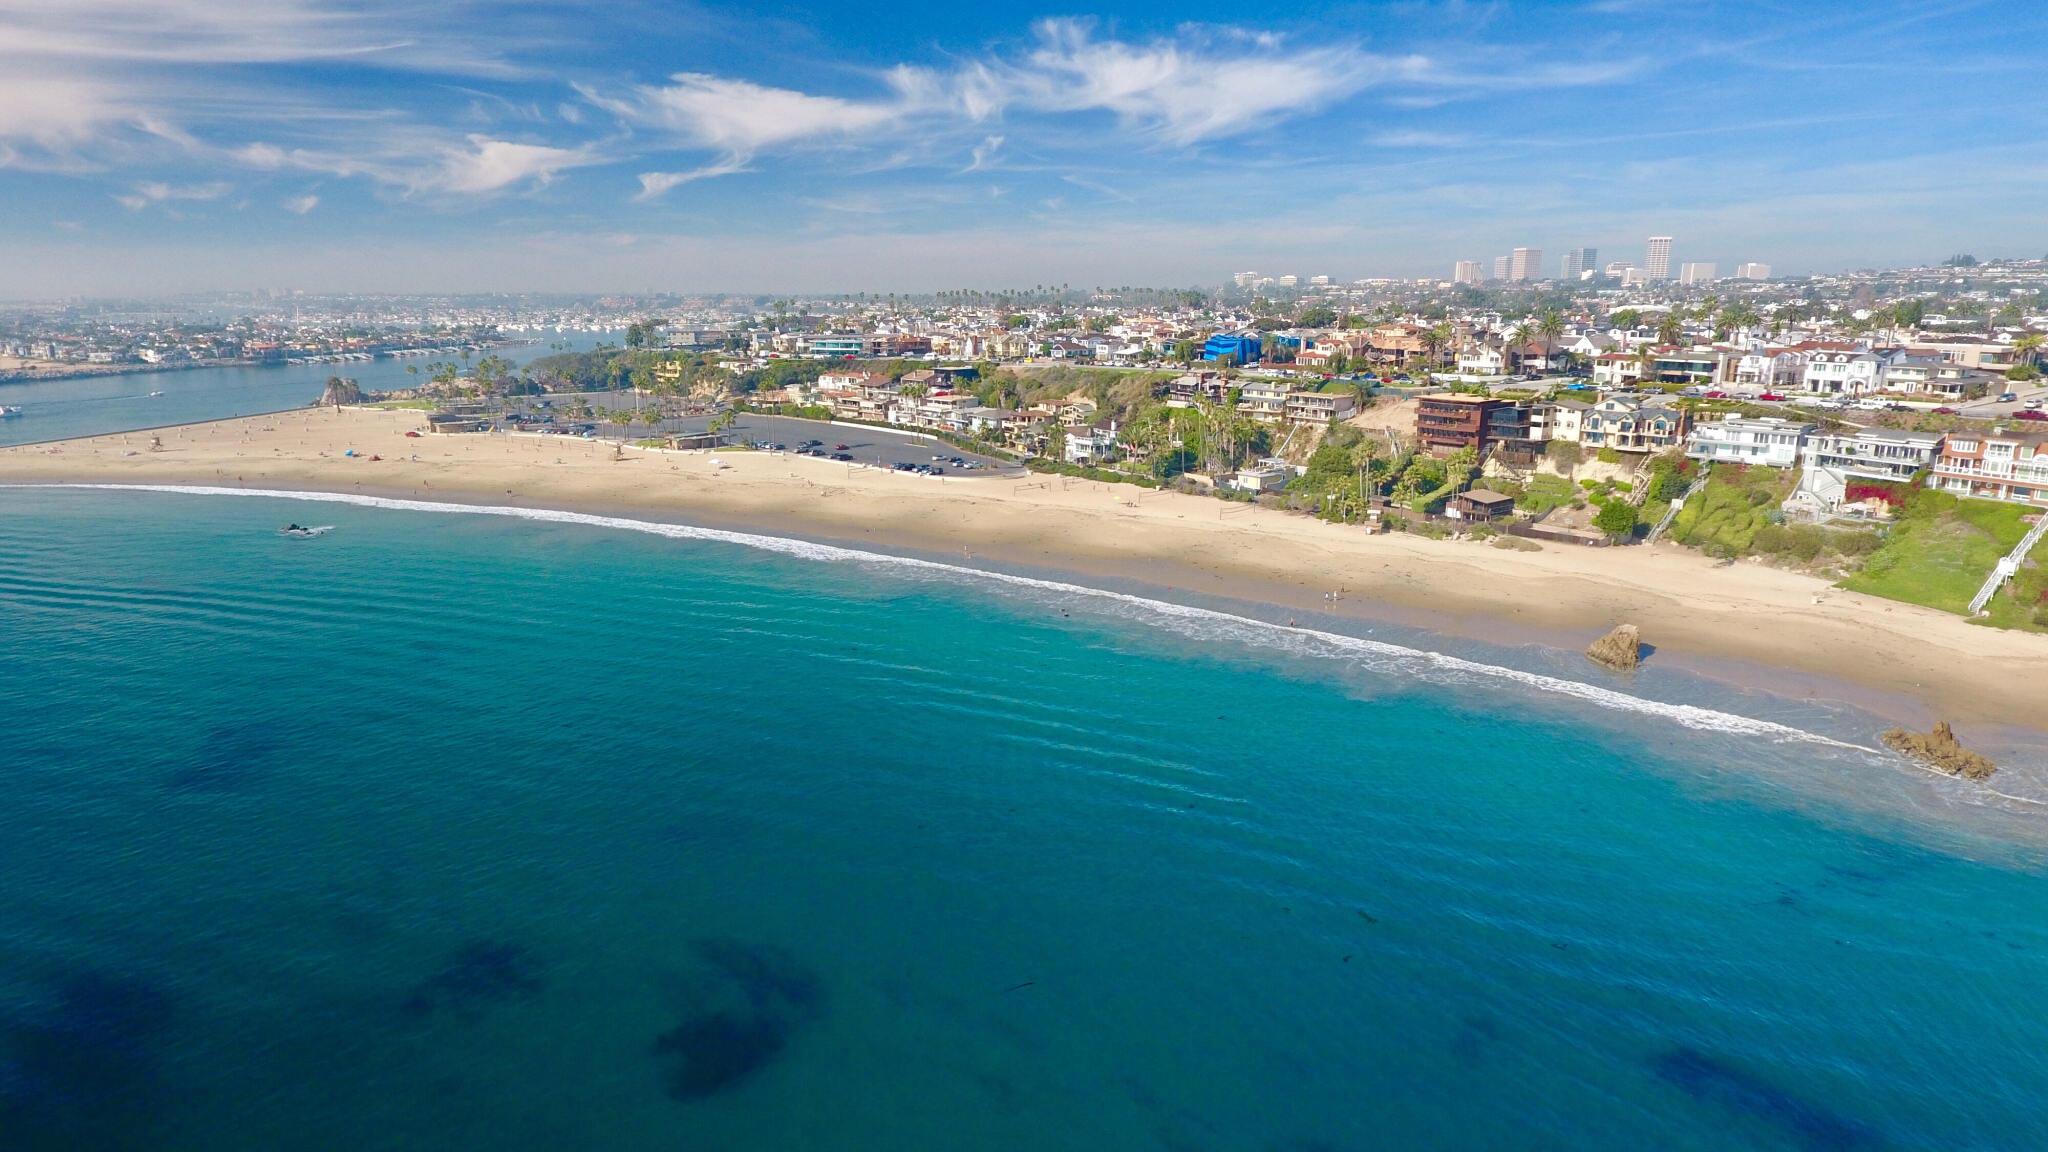 Best Beaches in Long Beach